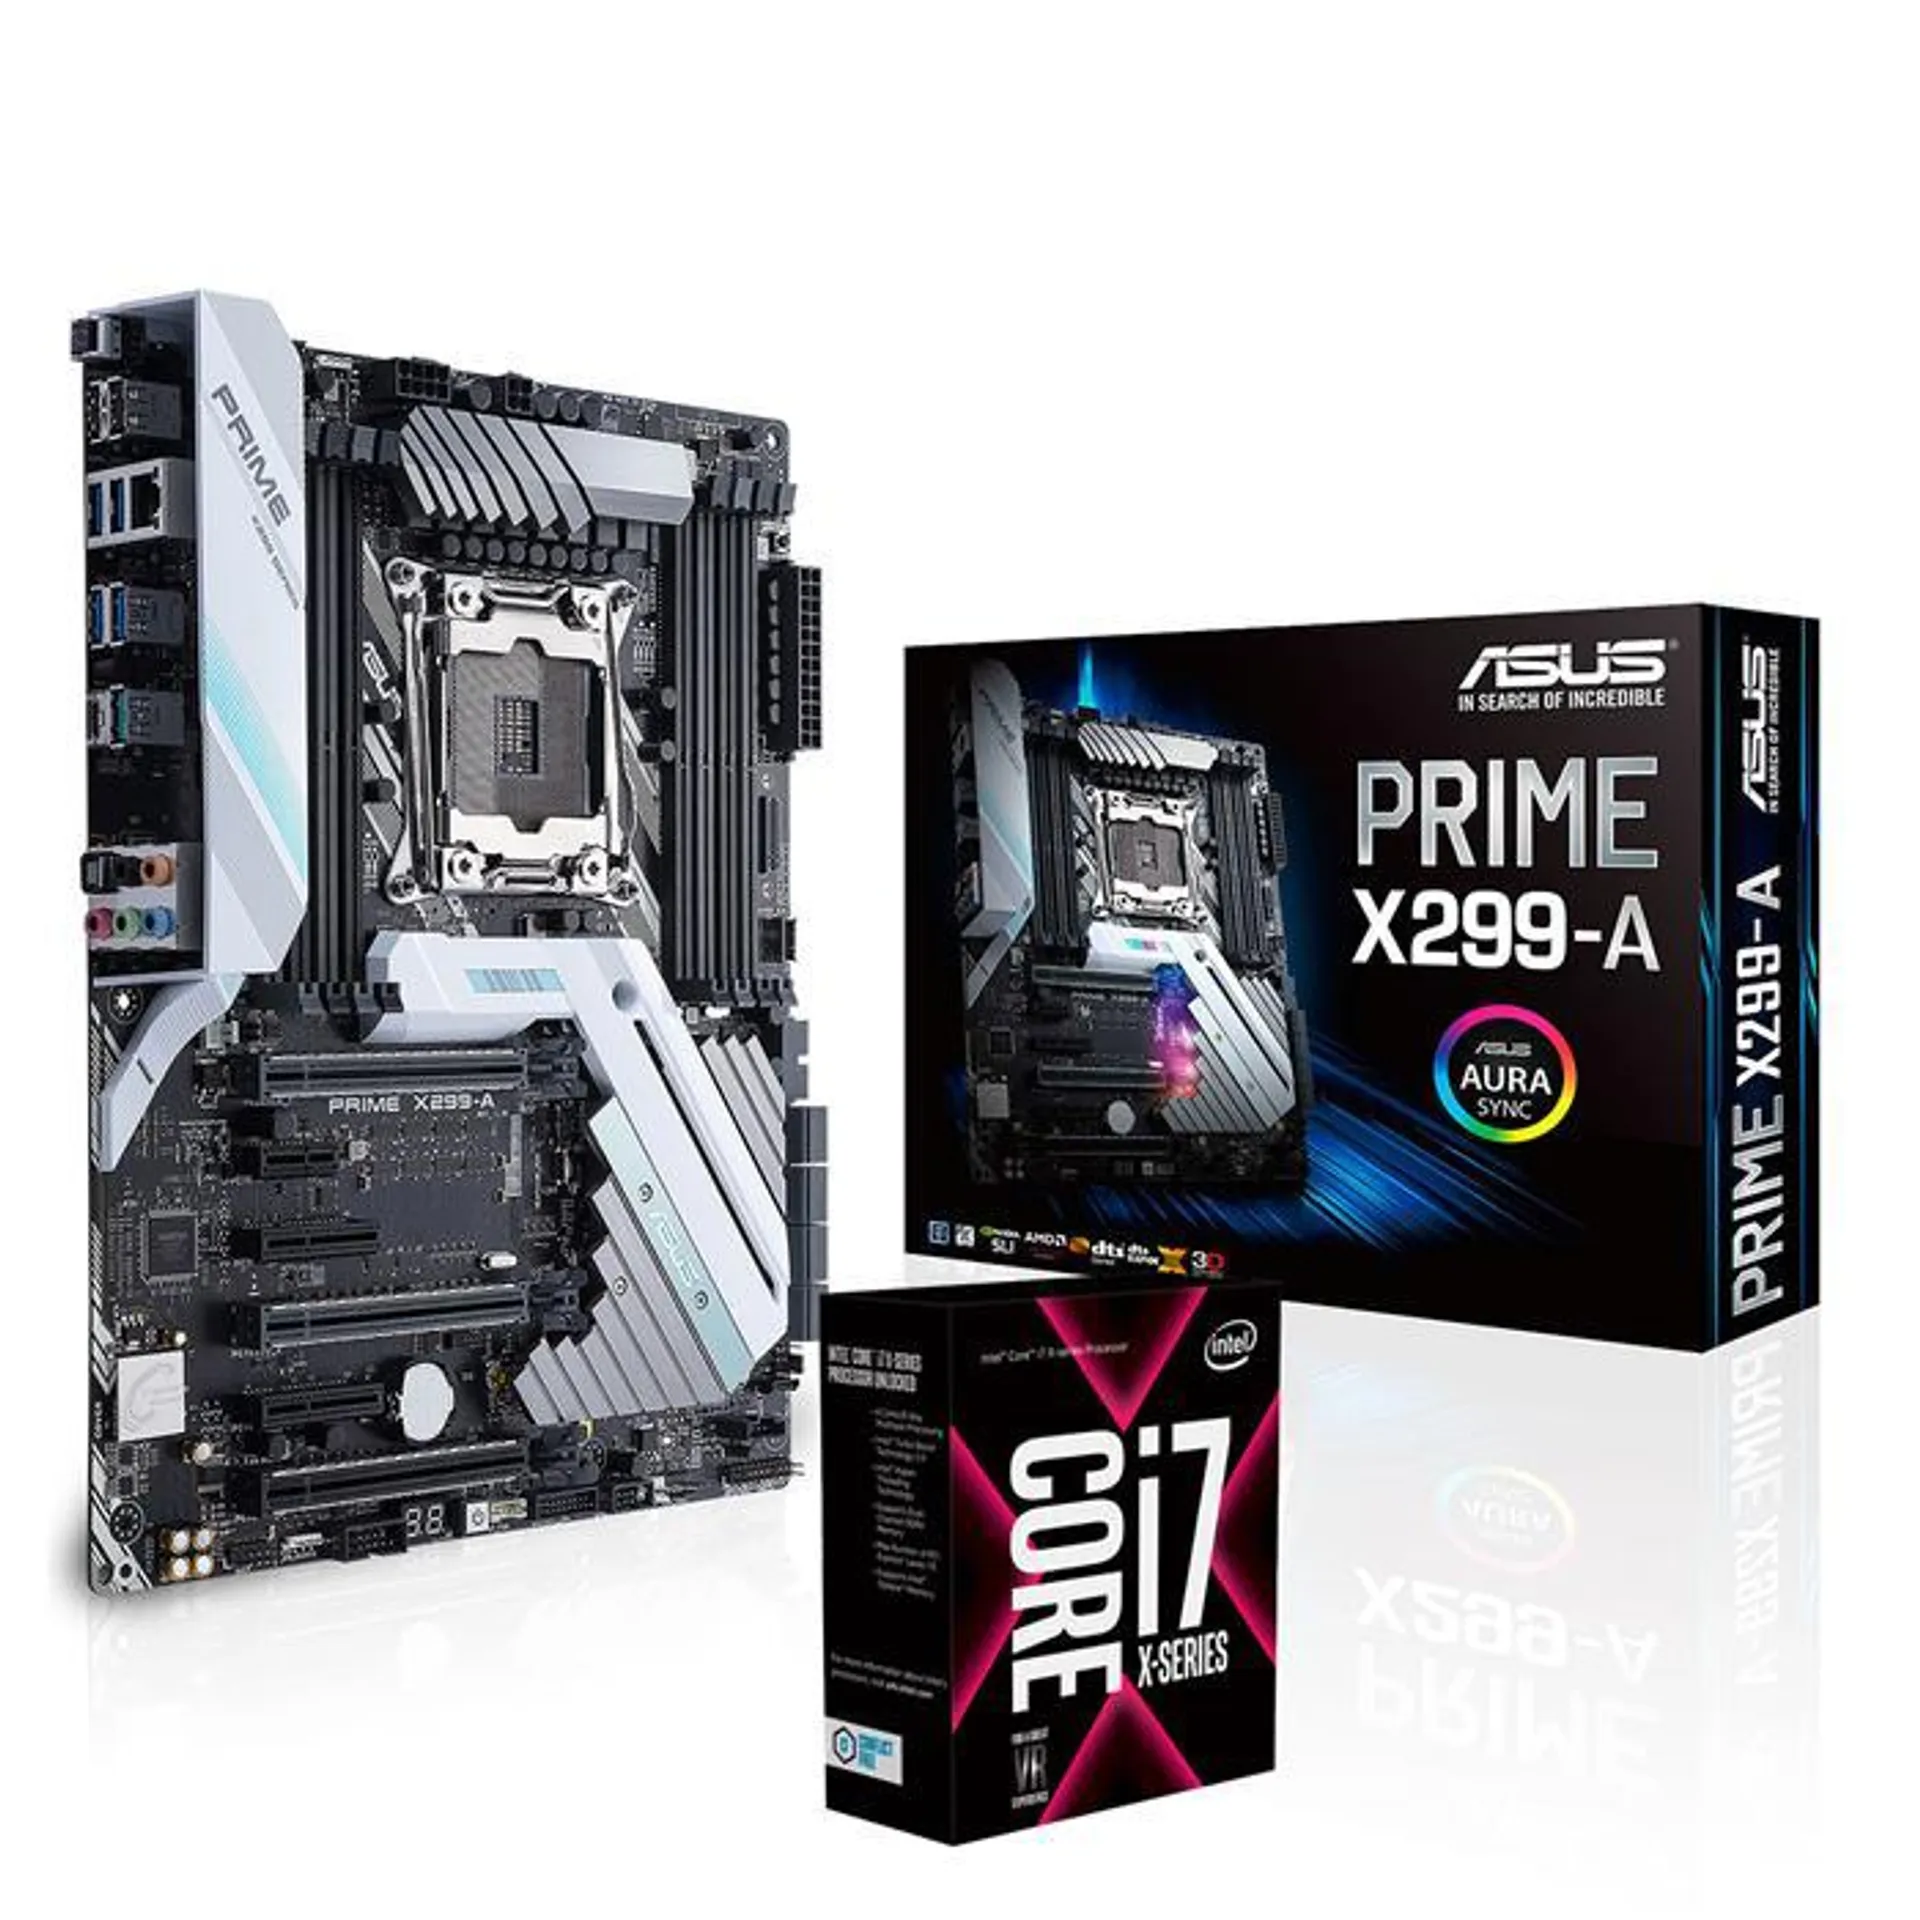 KIT GAMER SERVIDOR MOTHER ASUS PRIME X299-A DDR4 TRIPLE M.2 RGB + MICROPROCESADOR INTEL I7-7800X